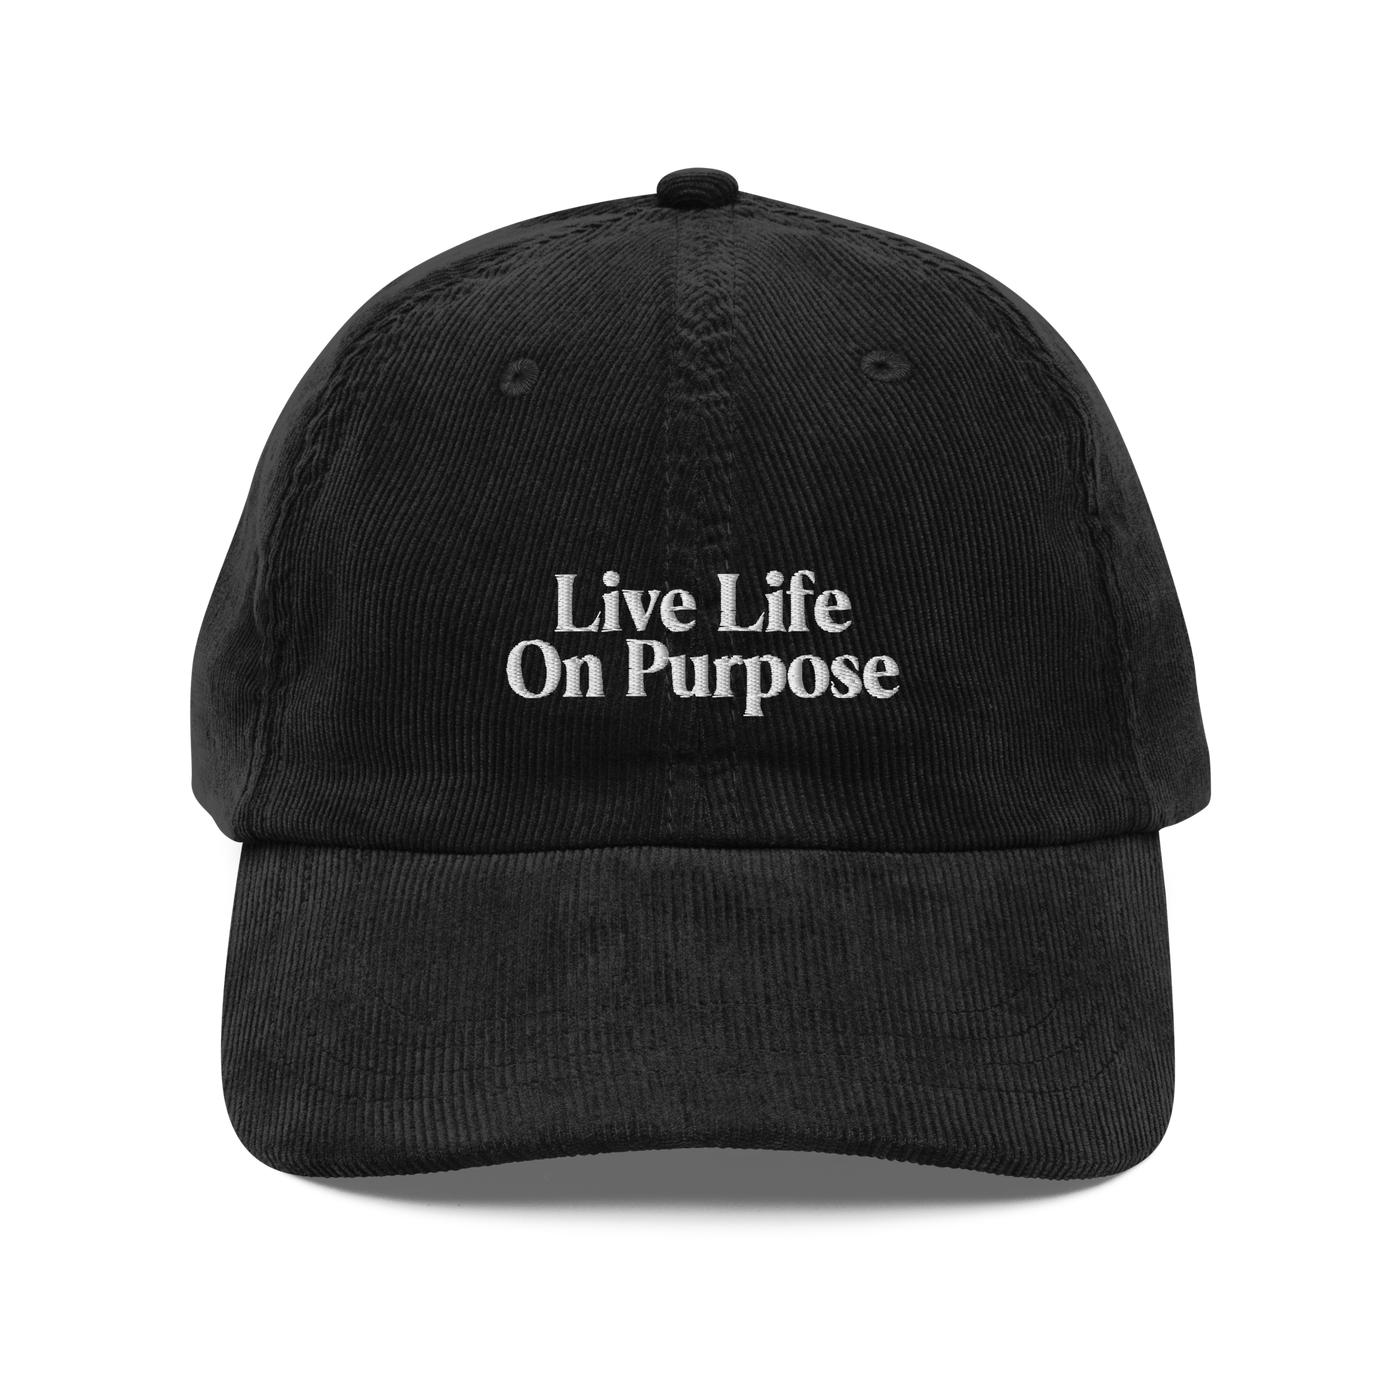 Live Life On Purpose Vintage Corduroy cap